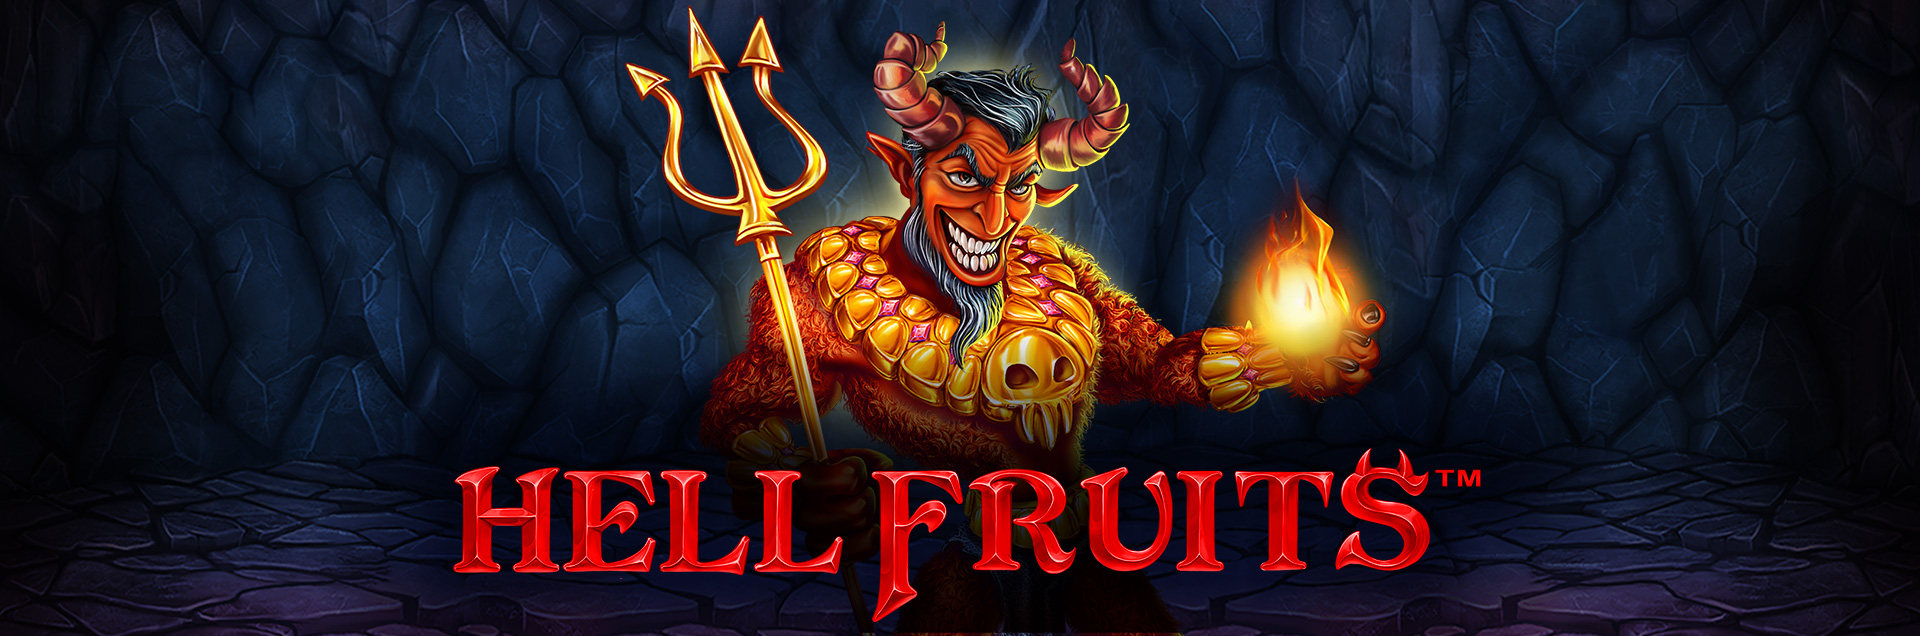 Hell Fruits header games